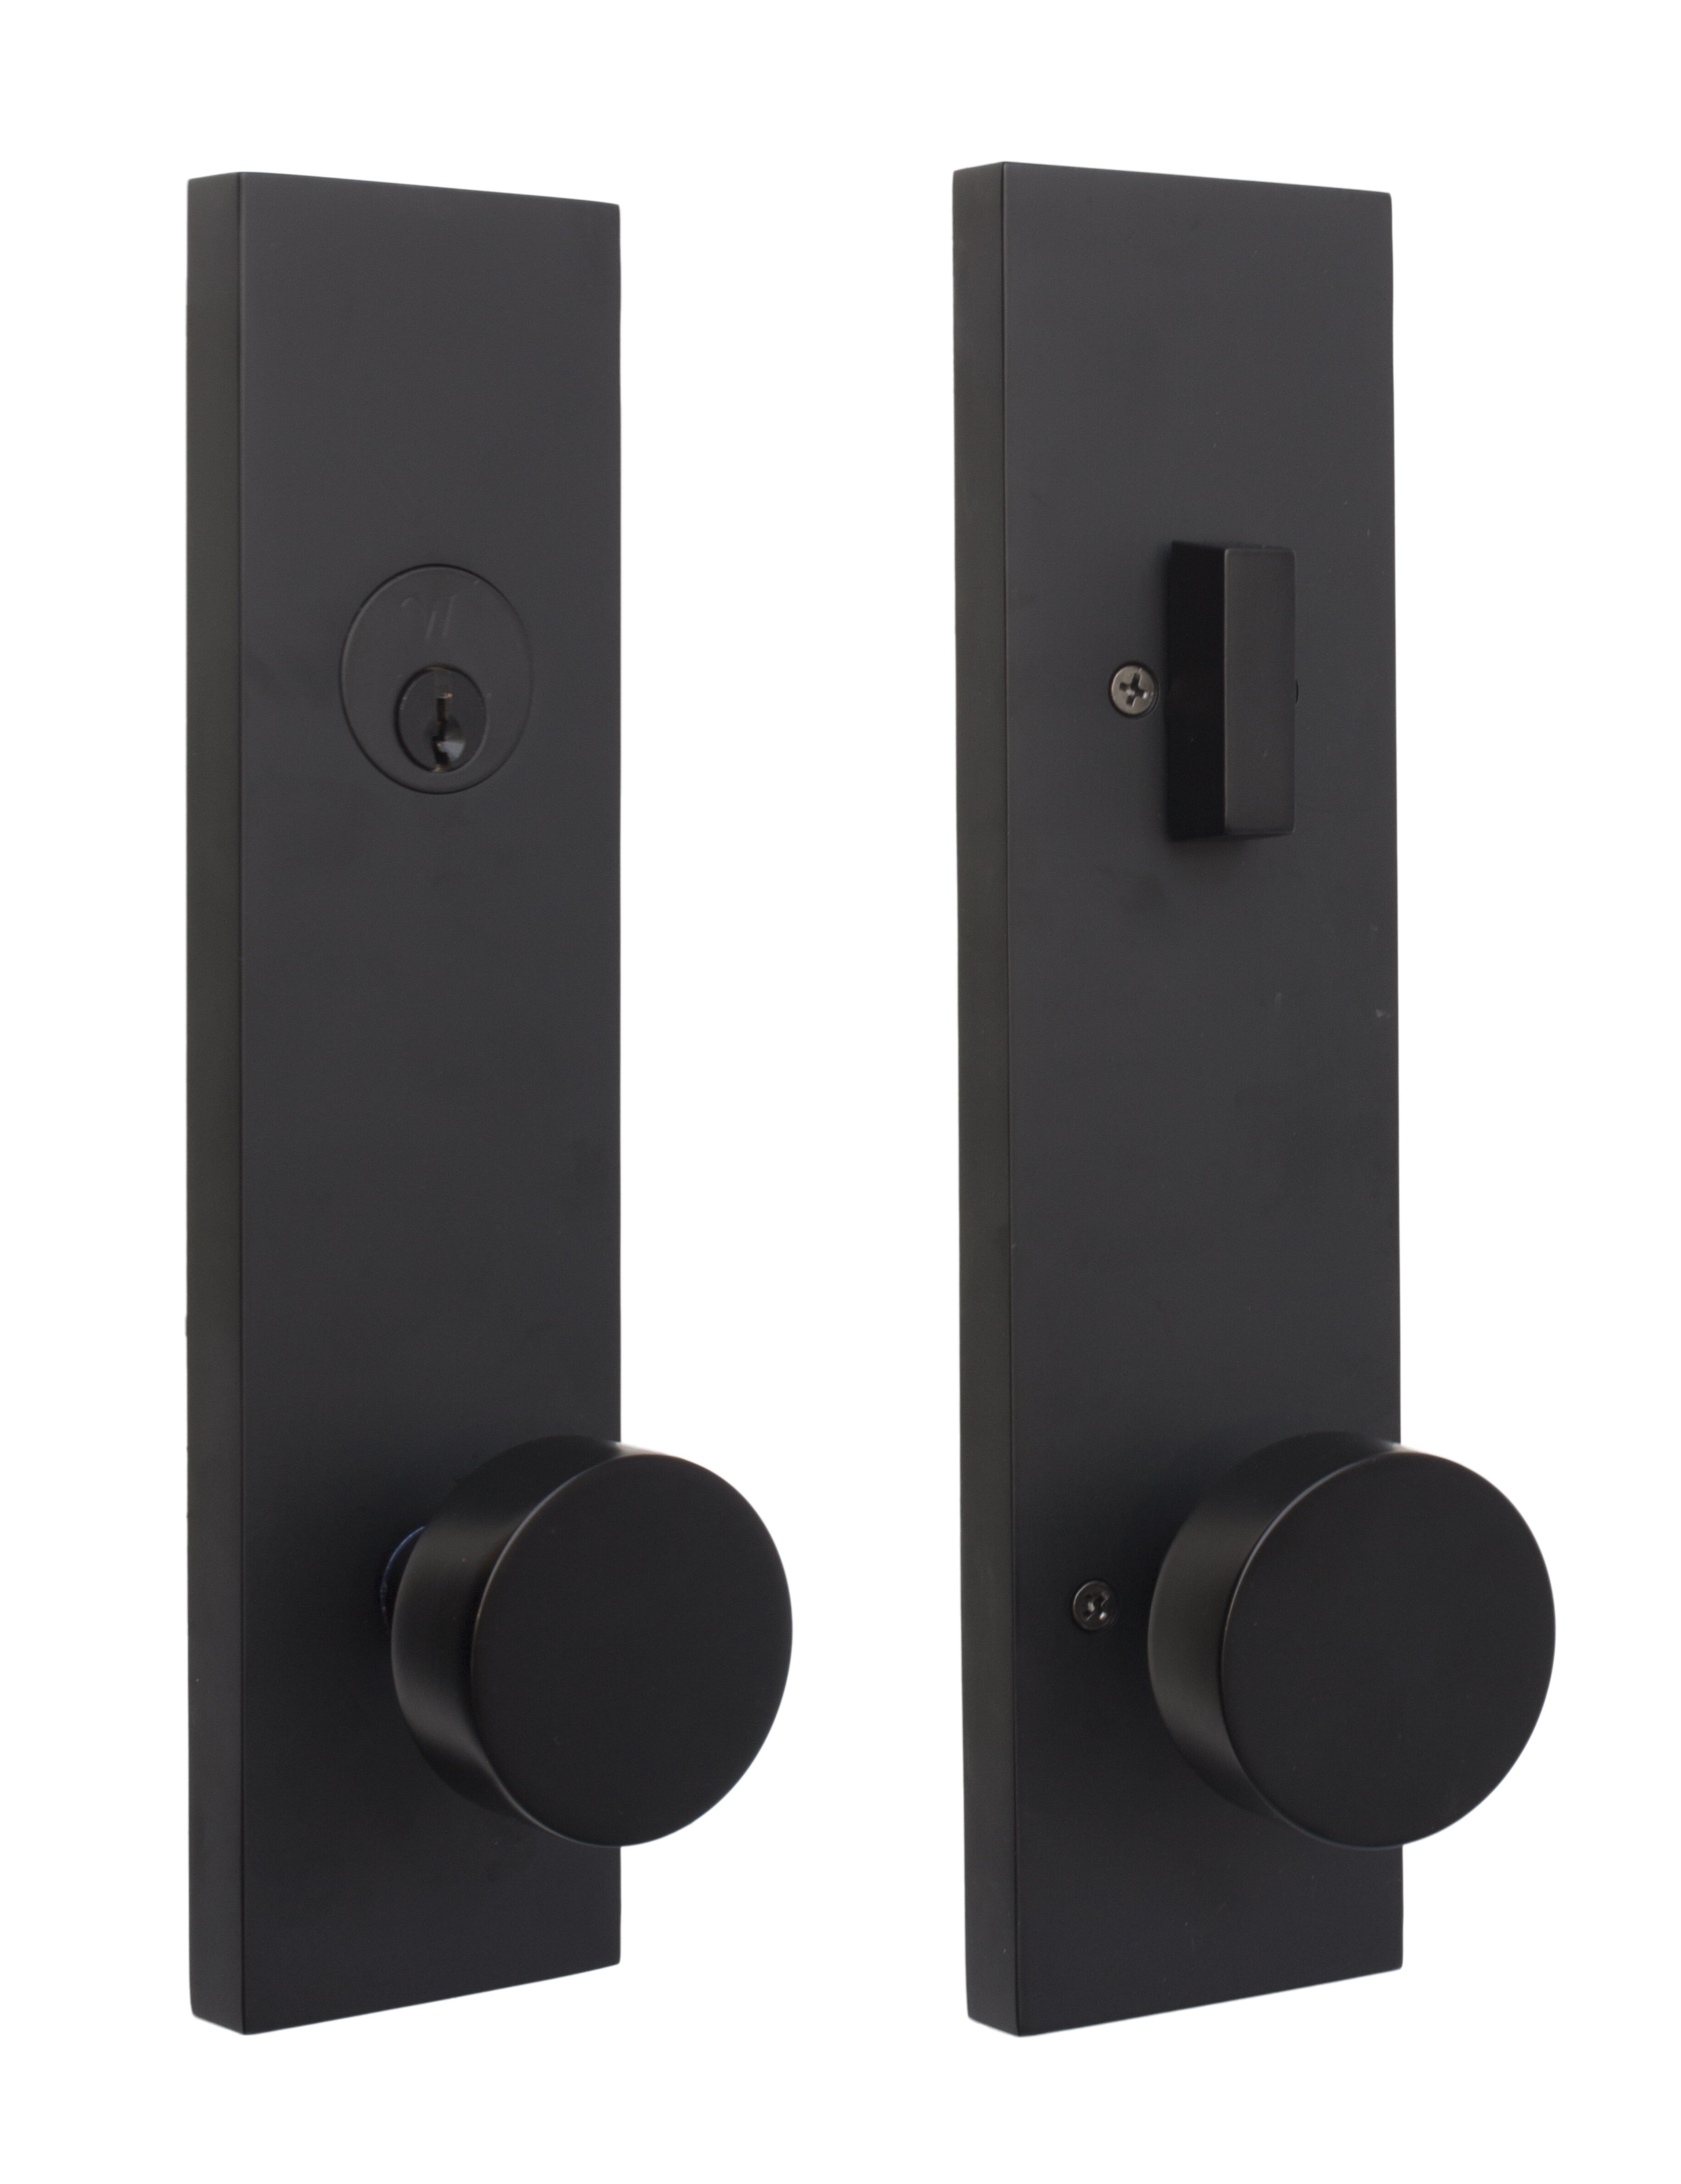 China Cylindrical Door Knob - Sleek Matte Black Design factory and